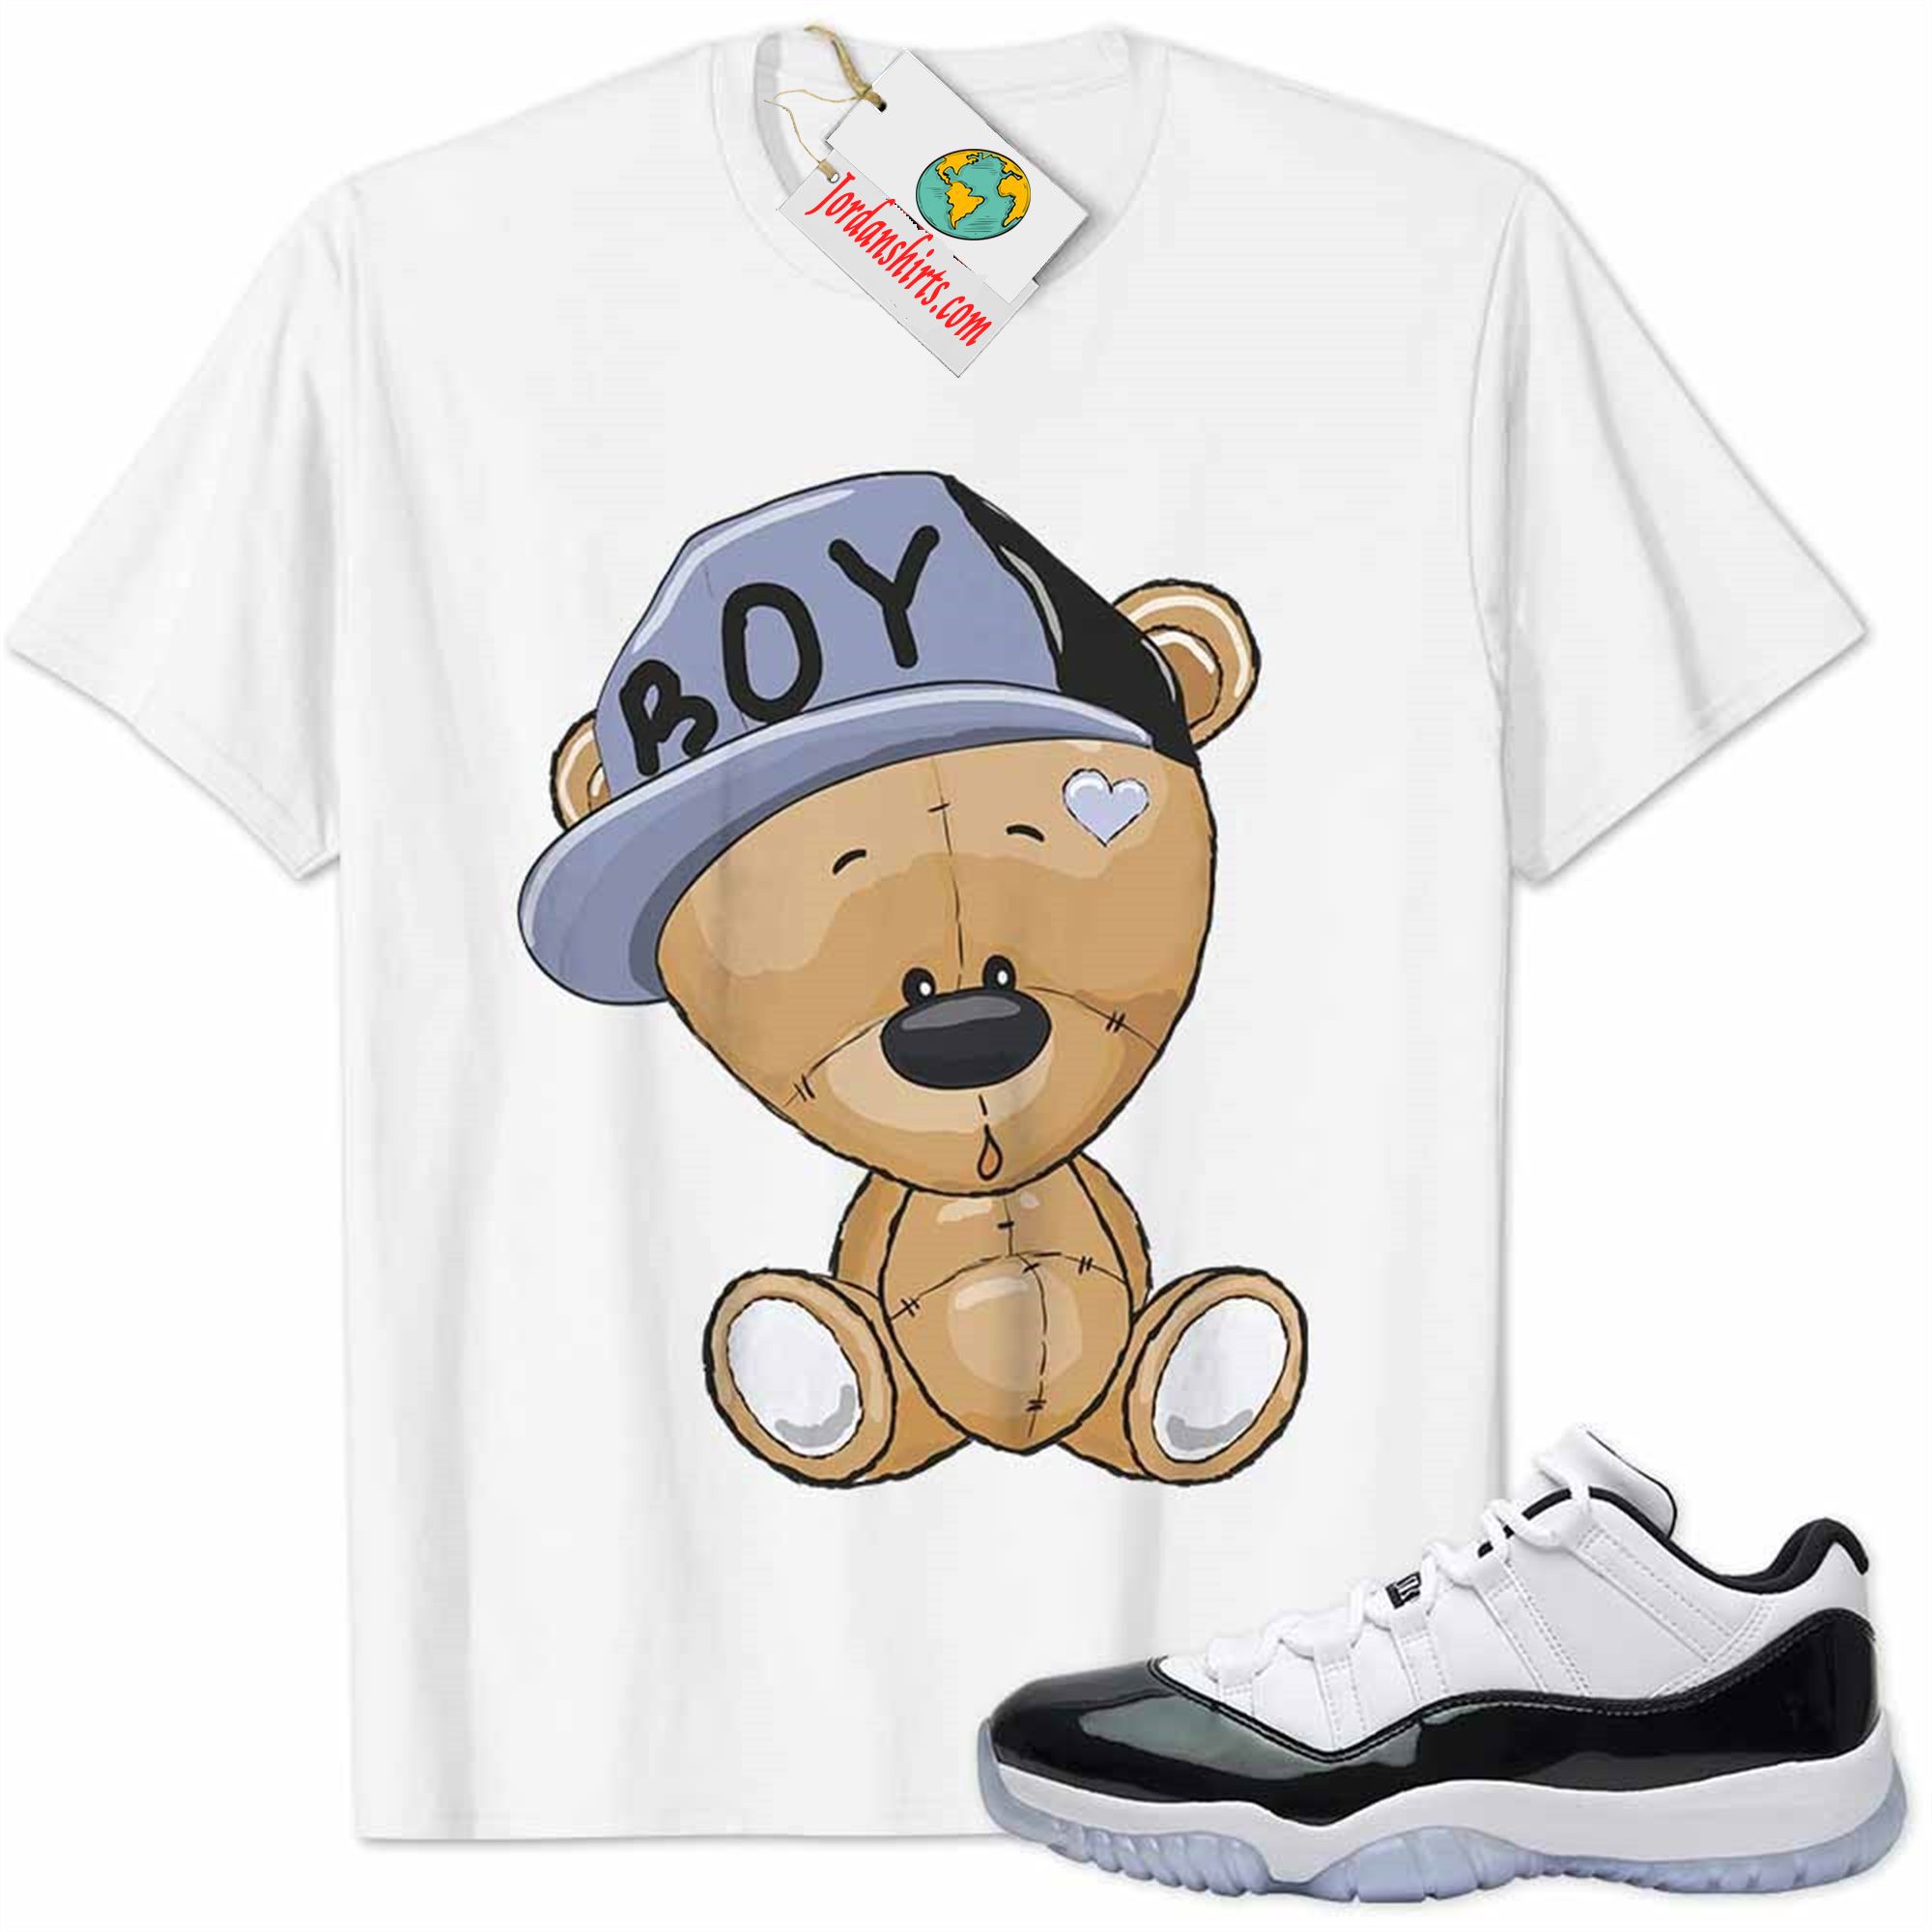 Jordan 11 Shirt, Jordan 11 Emerald Shirt Cute Baby Teddy Bear White Size Up To 5xl